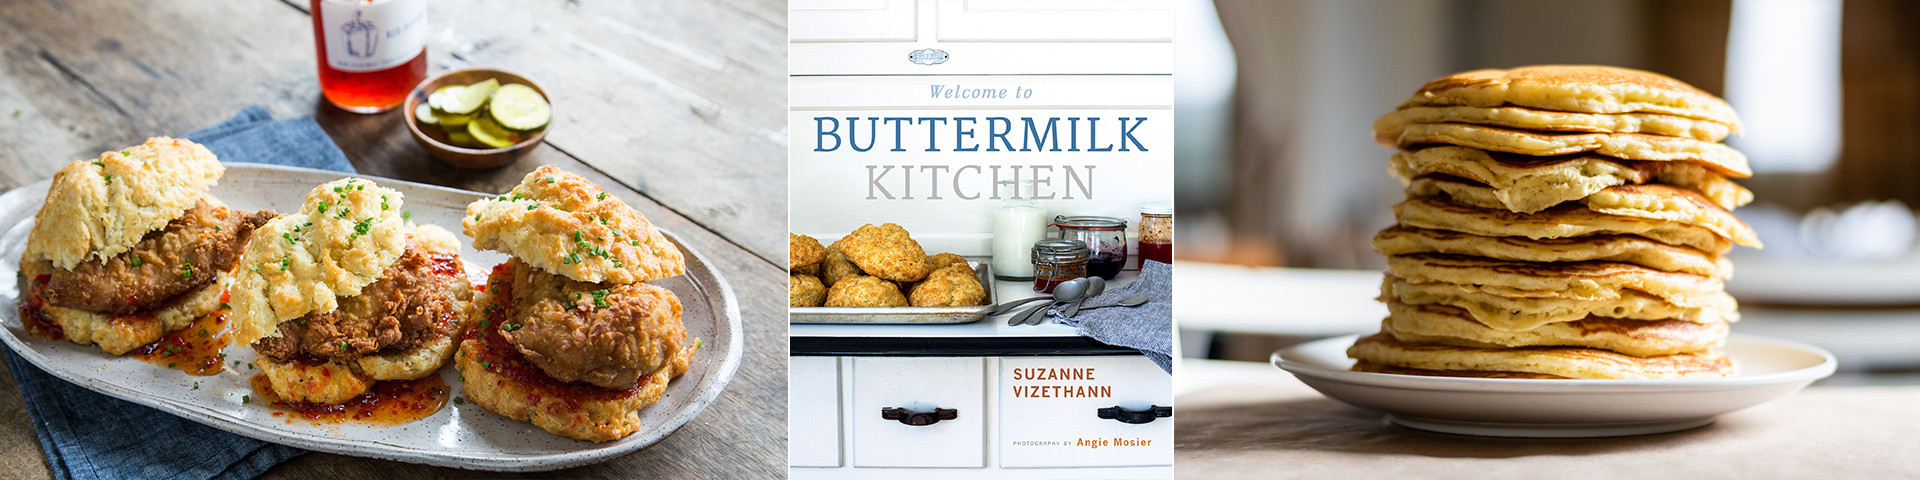 Welcome to Buttermilk Kitchen by Suzanne Vizethann: